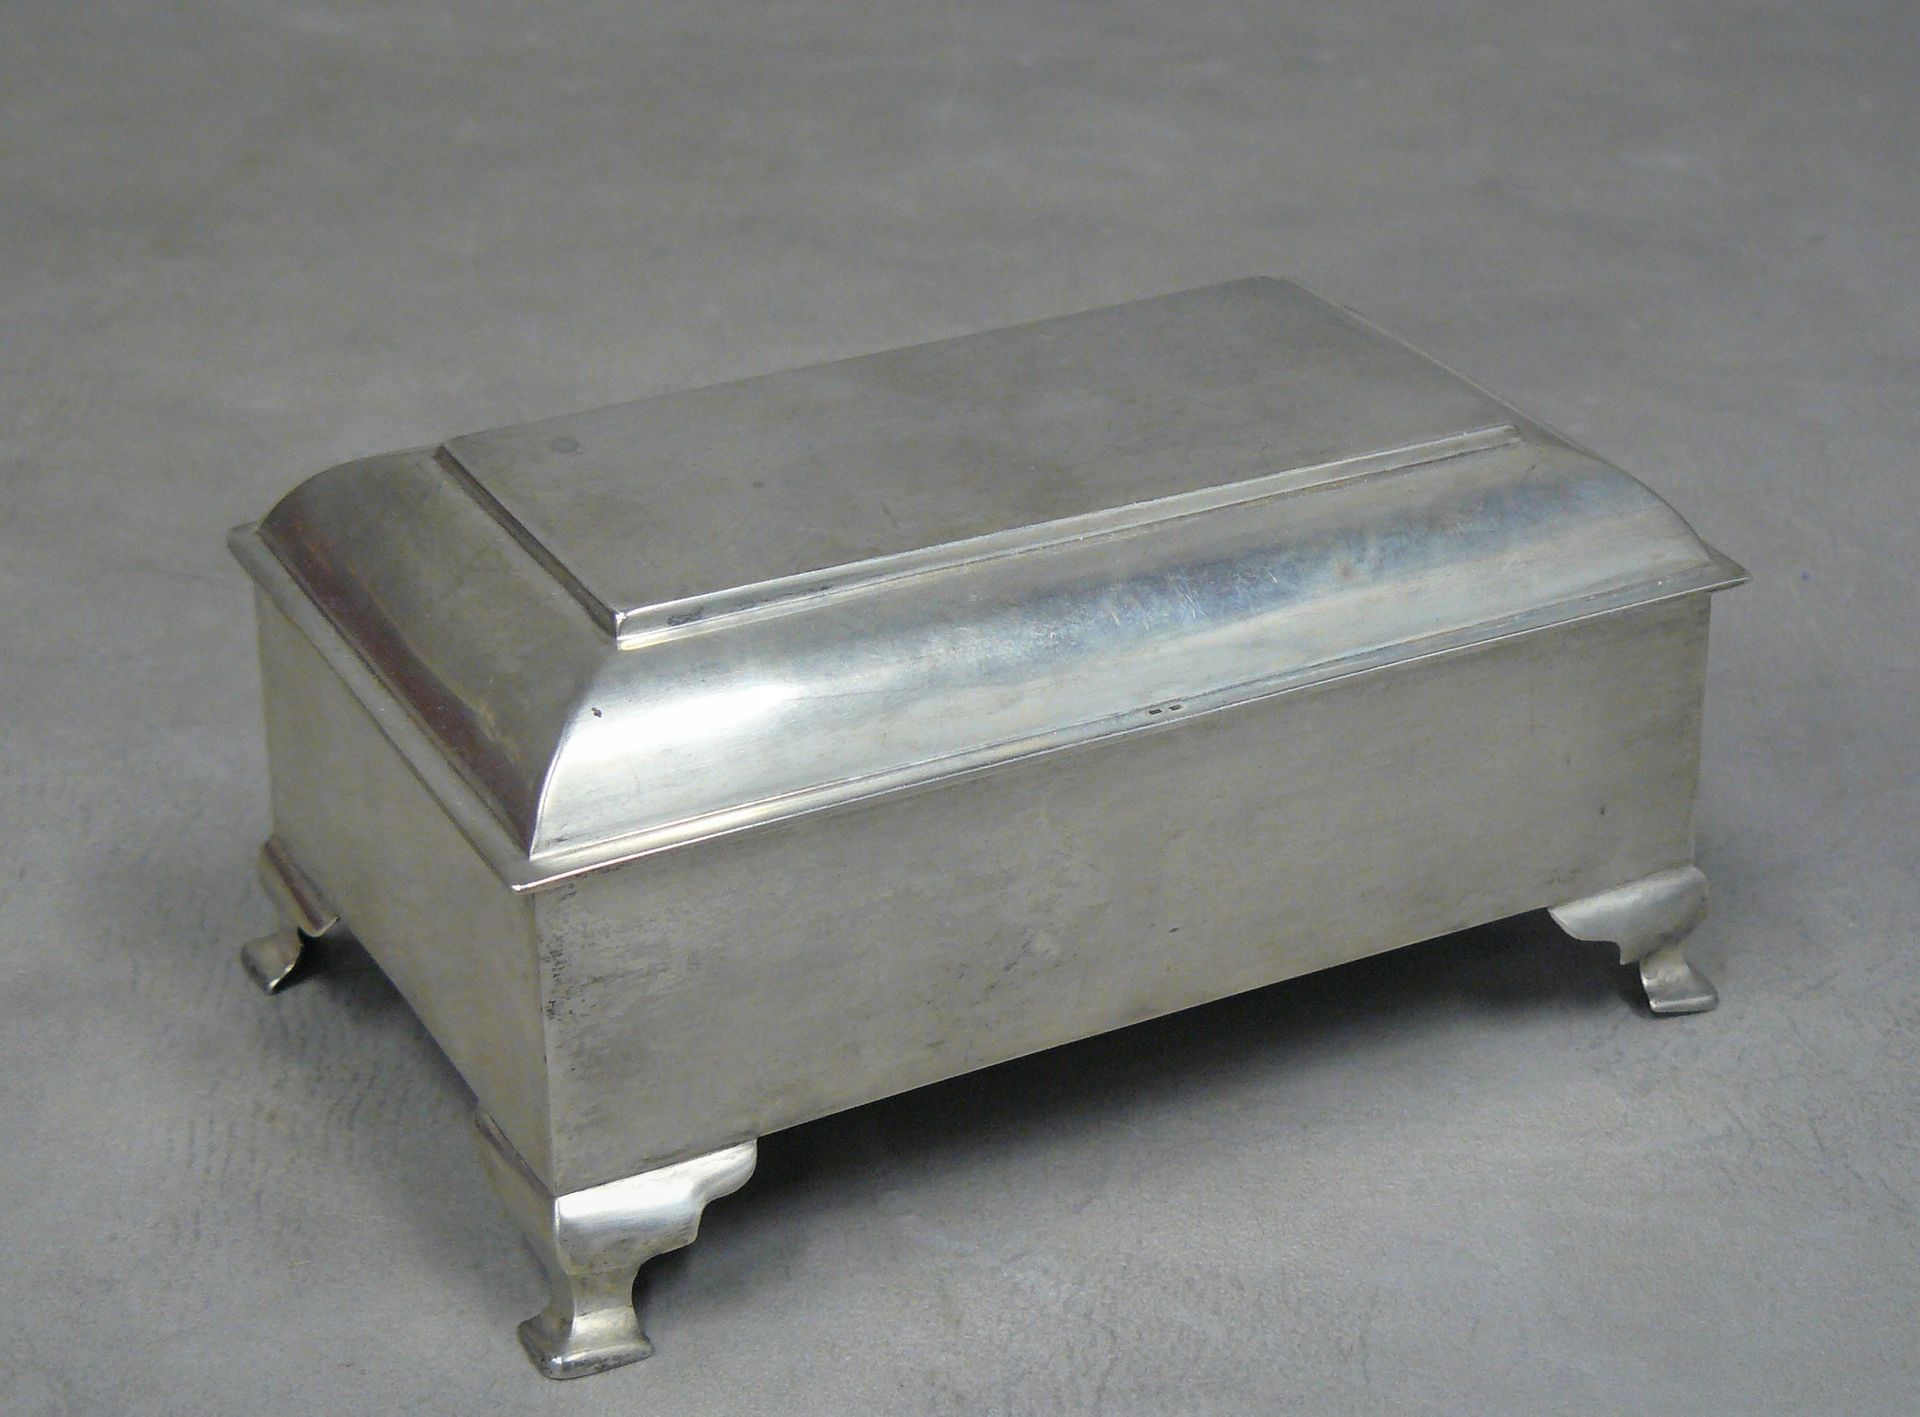 Null scatola inglese in argento (weevil), interno in legno L 14,5 cm - Pb 257 g